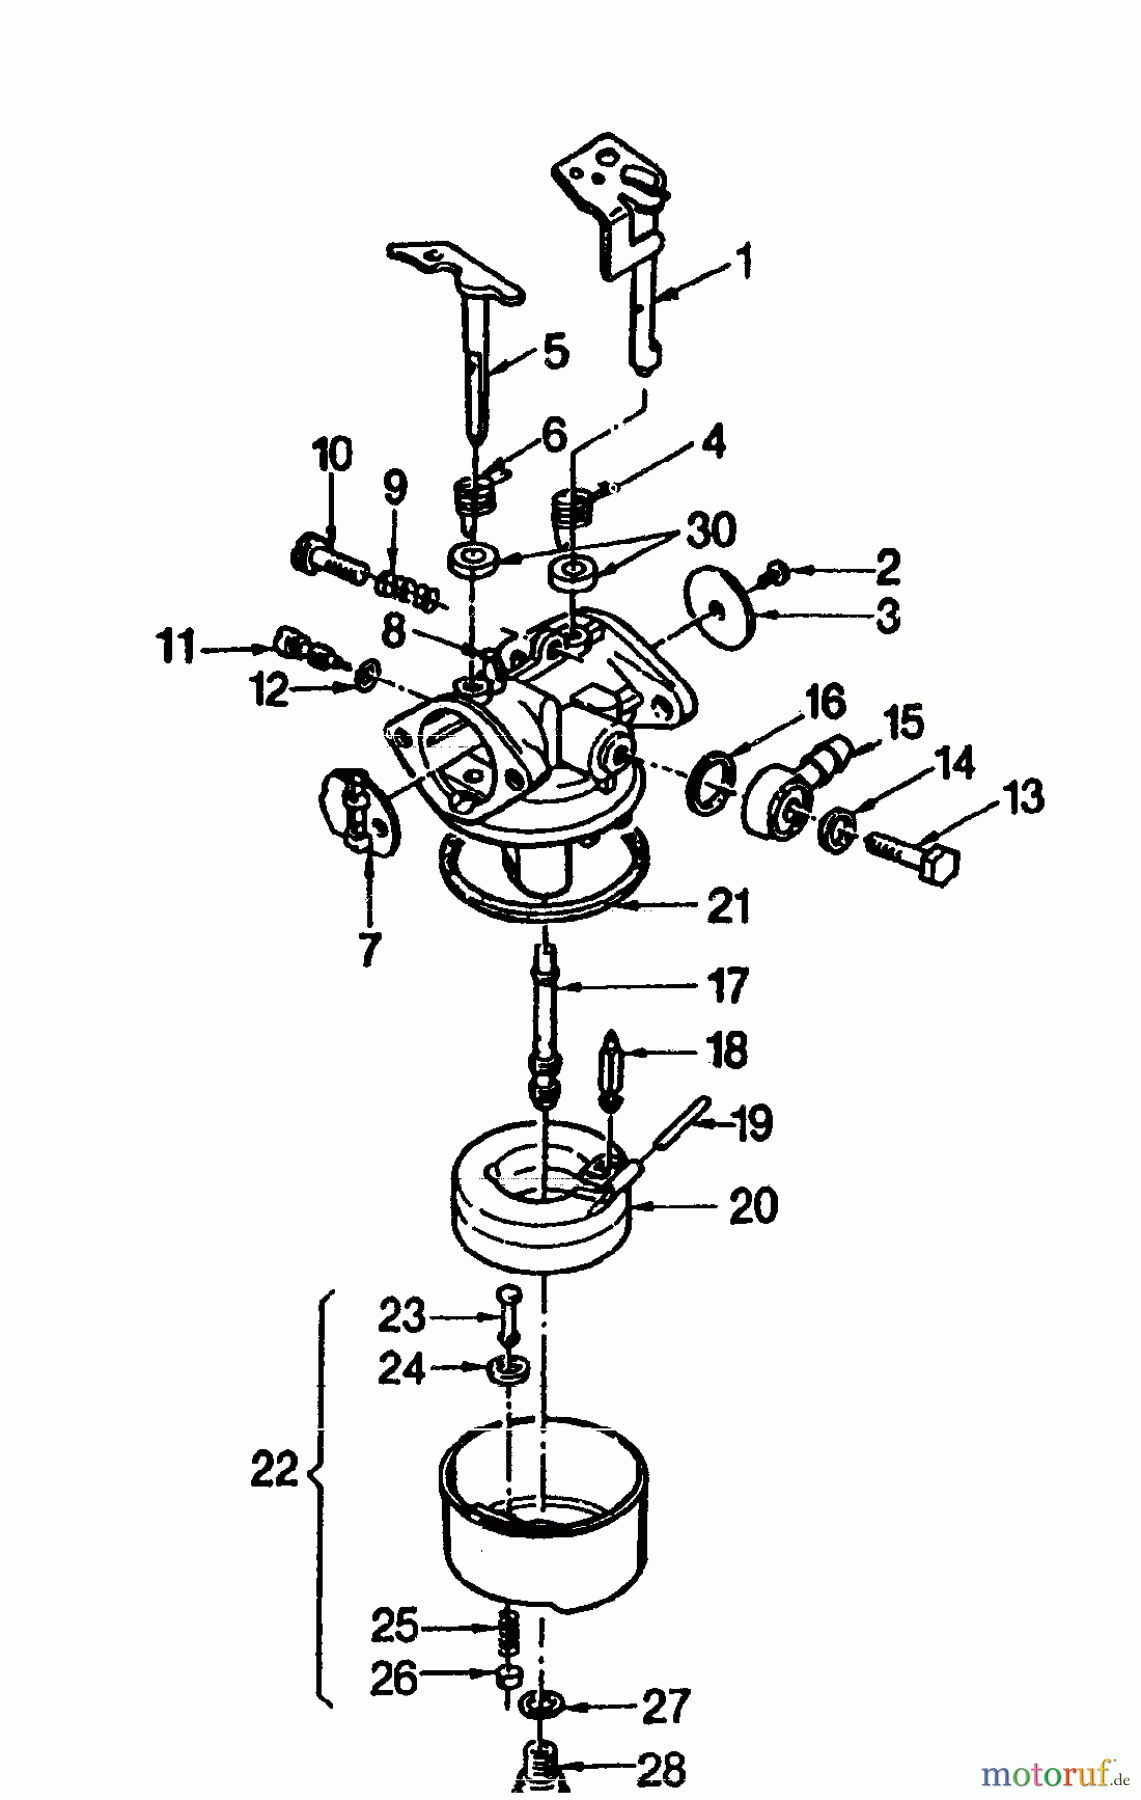  Golf Cutter bar mower 370 BMR 4 07510.05  (1995) Carburetor